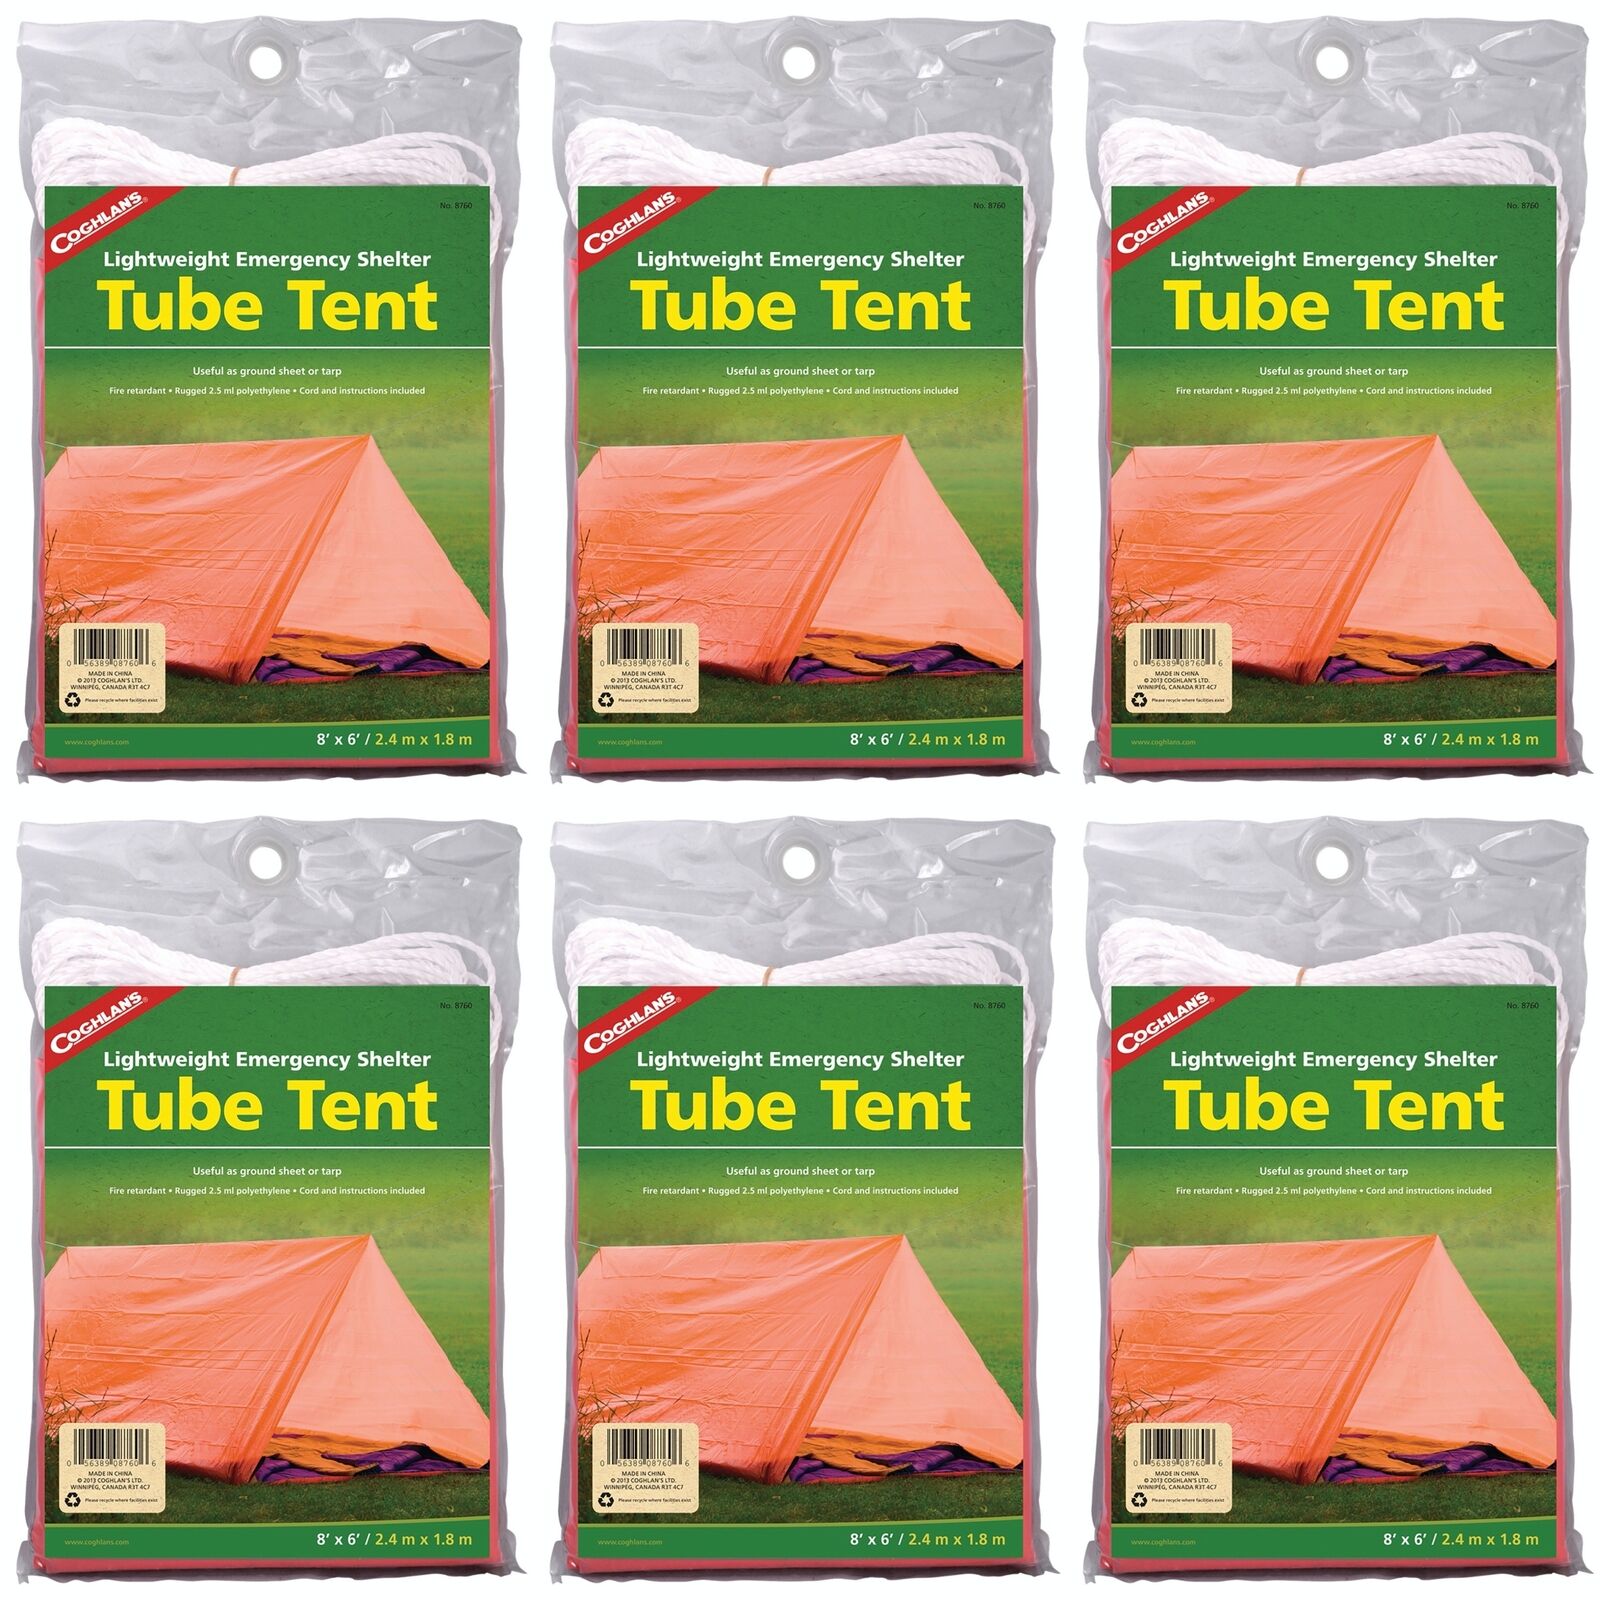 Coghlan's Tube Tent Emergency Lightweight Polyethylene Camping Shelter (6-Pack)